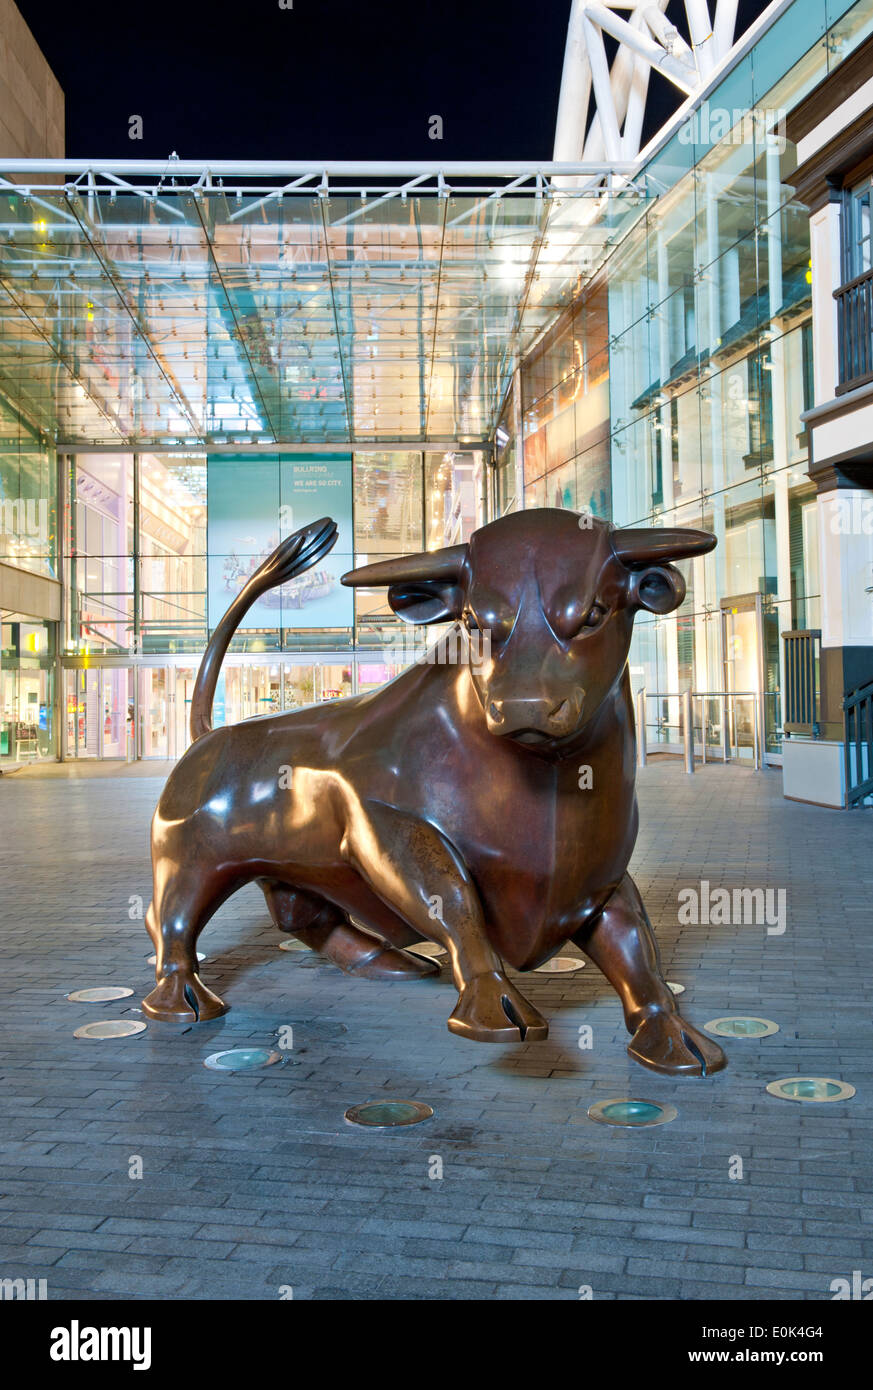 Bronze Sculpture of a Bull, The Bullring Shopping Centre, Birmingham, West Midlands, England, UK Stock Photo